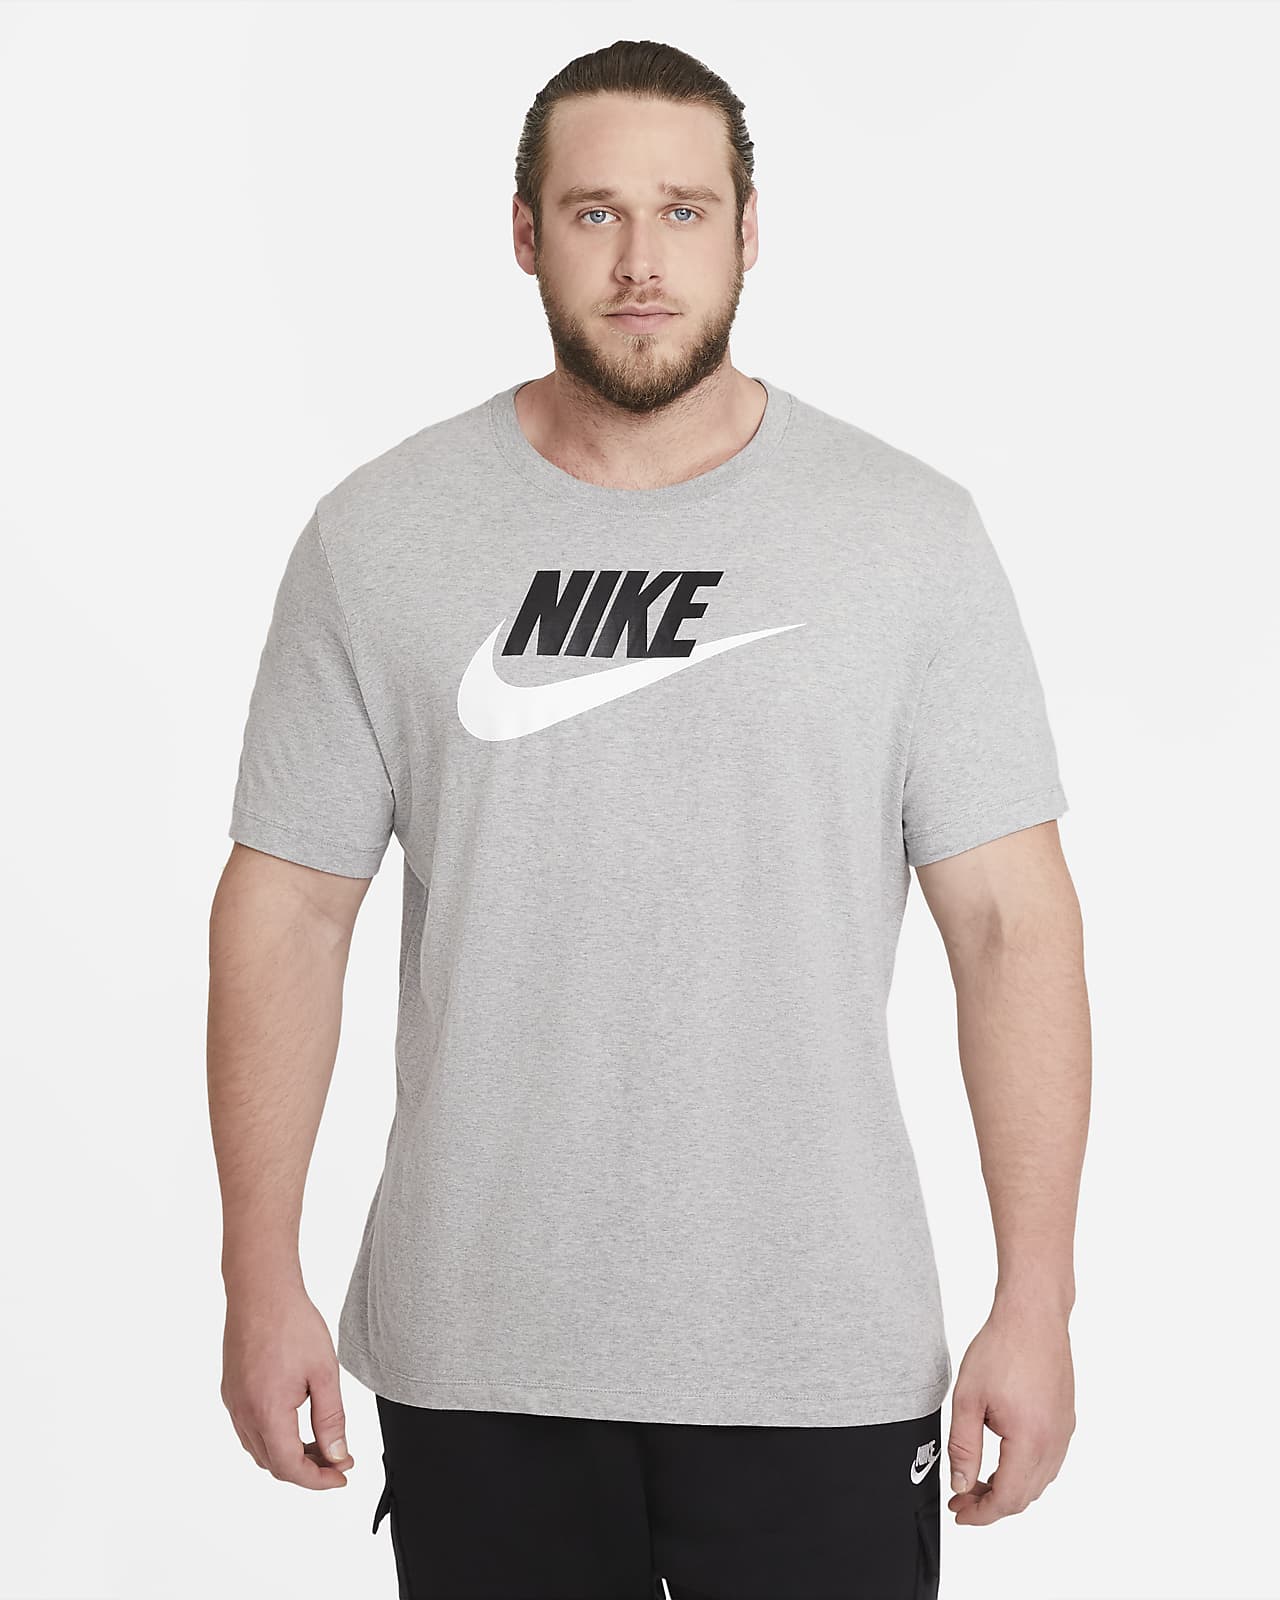 Nike T SHIRT HOMME GRIS/BLANC